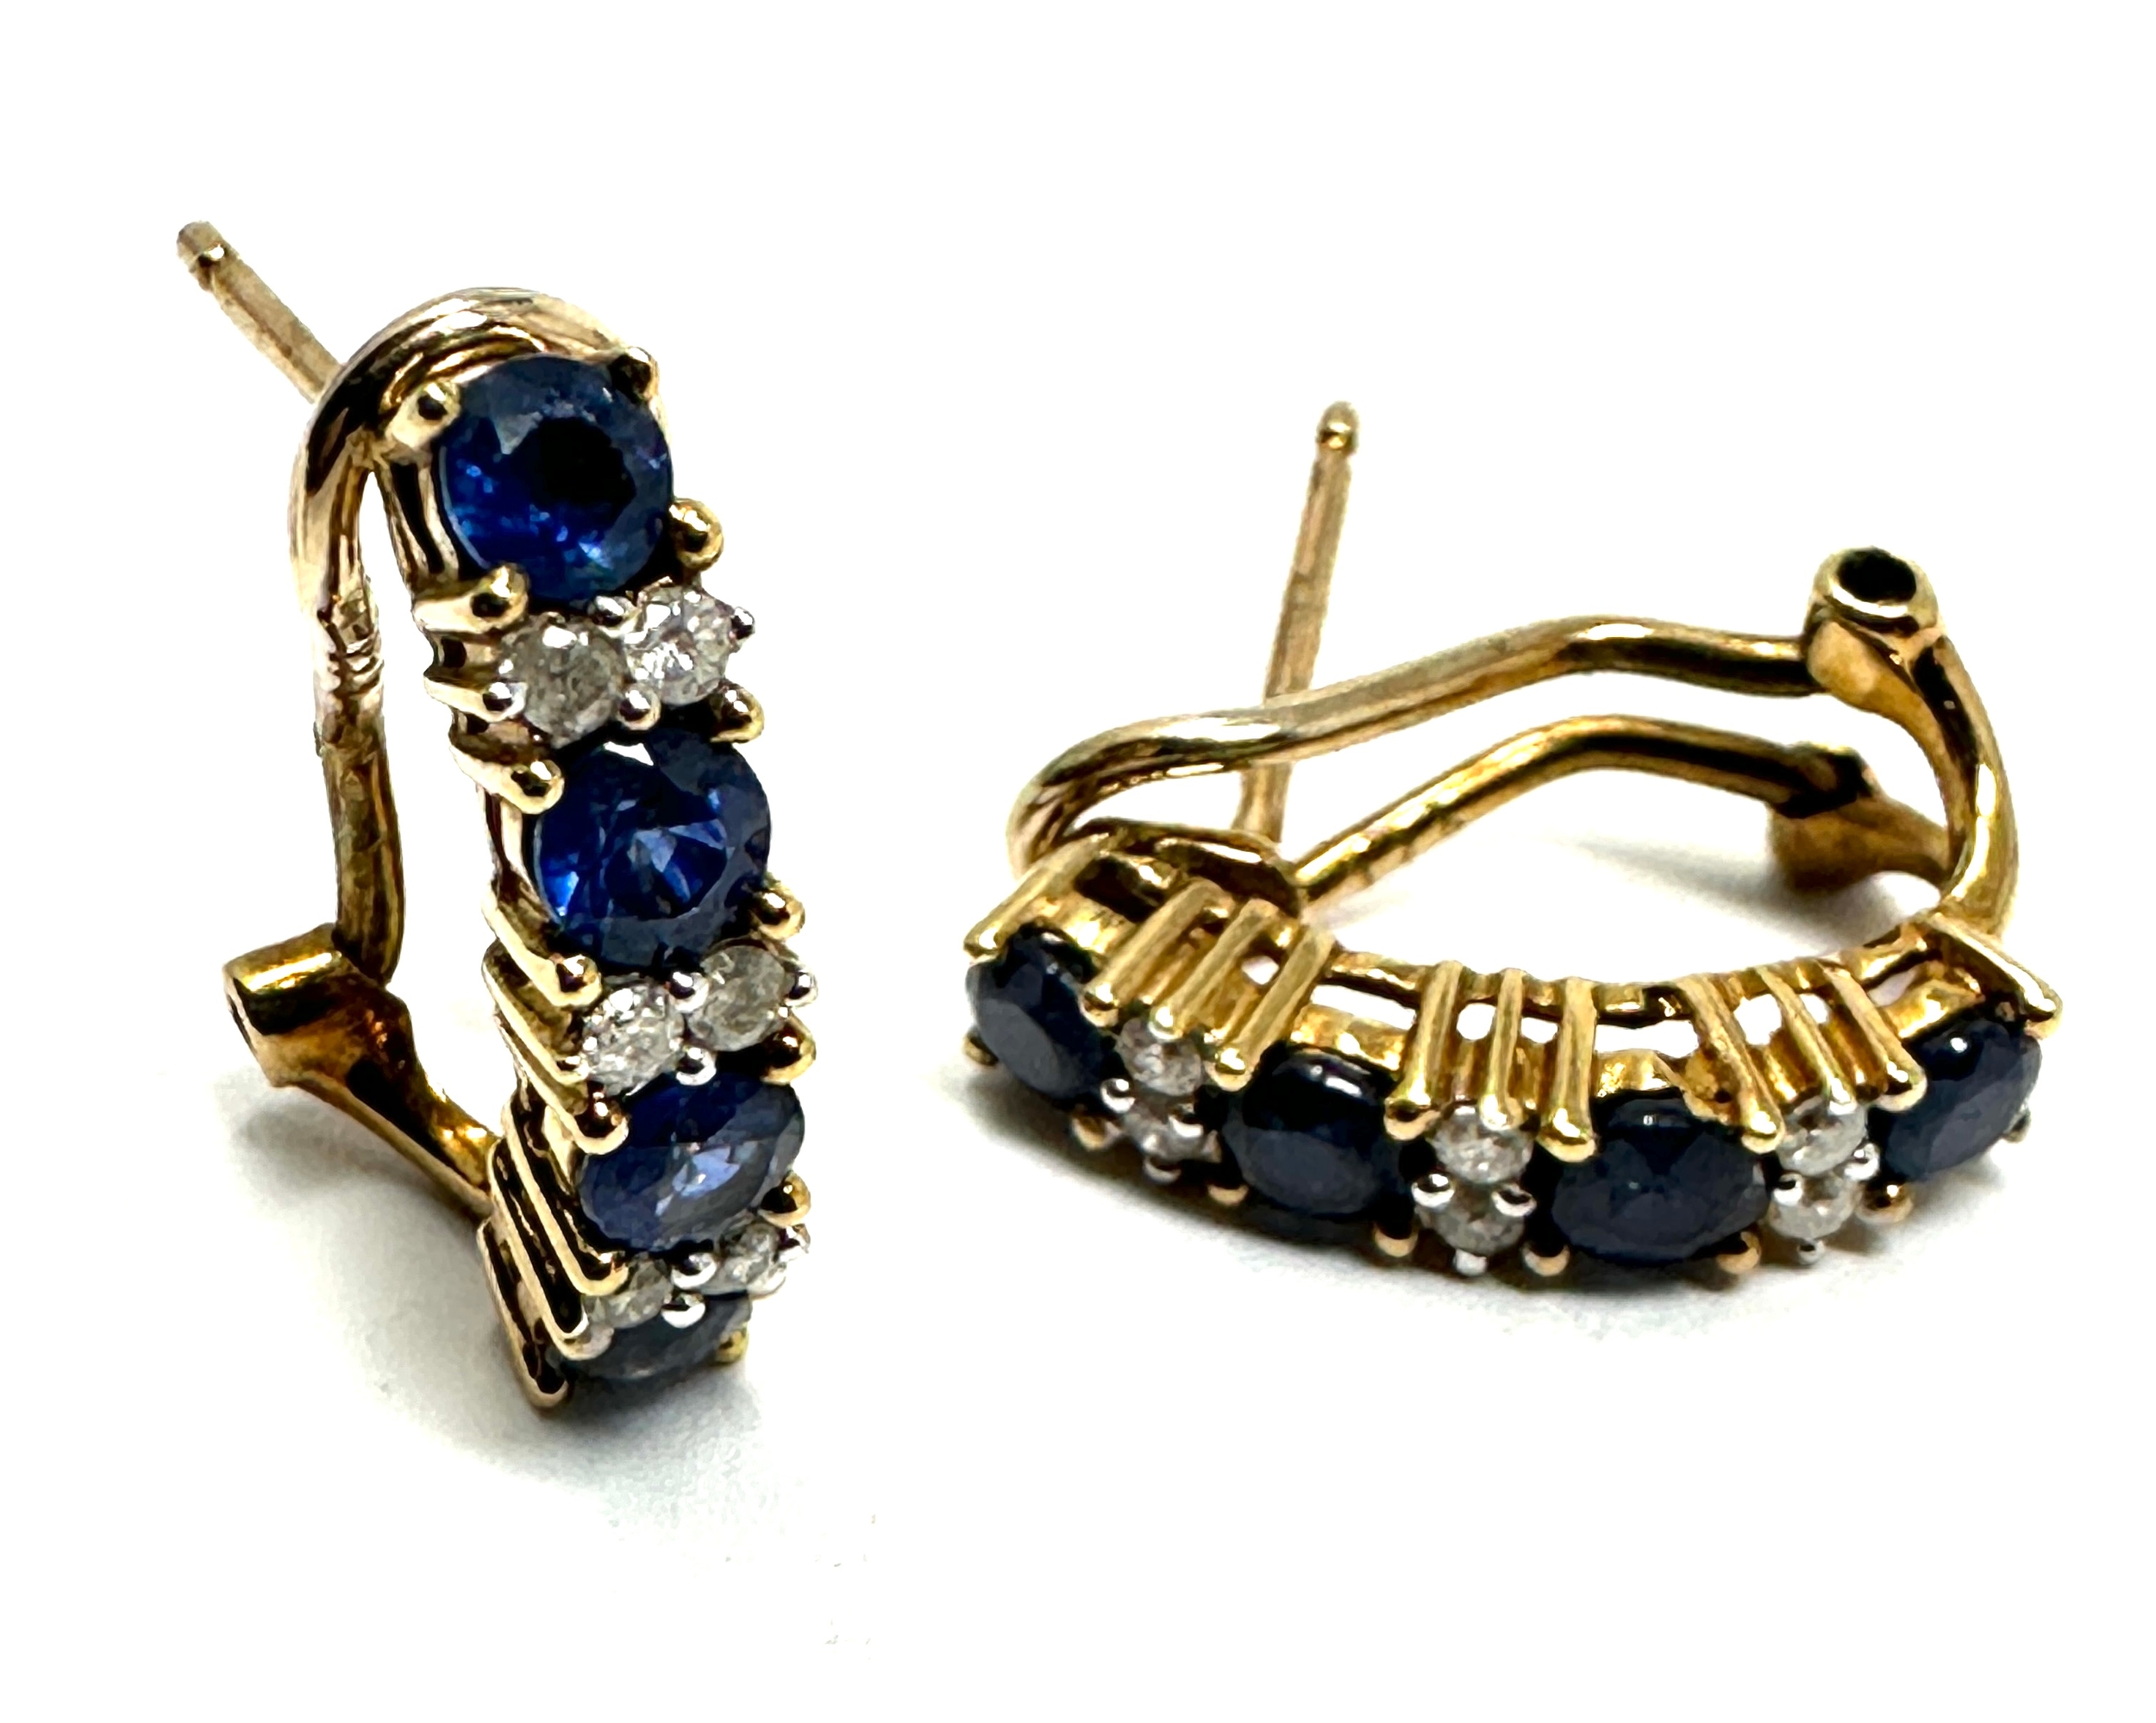 9ct gold sapphire & diamond earring weight 2.6g